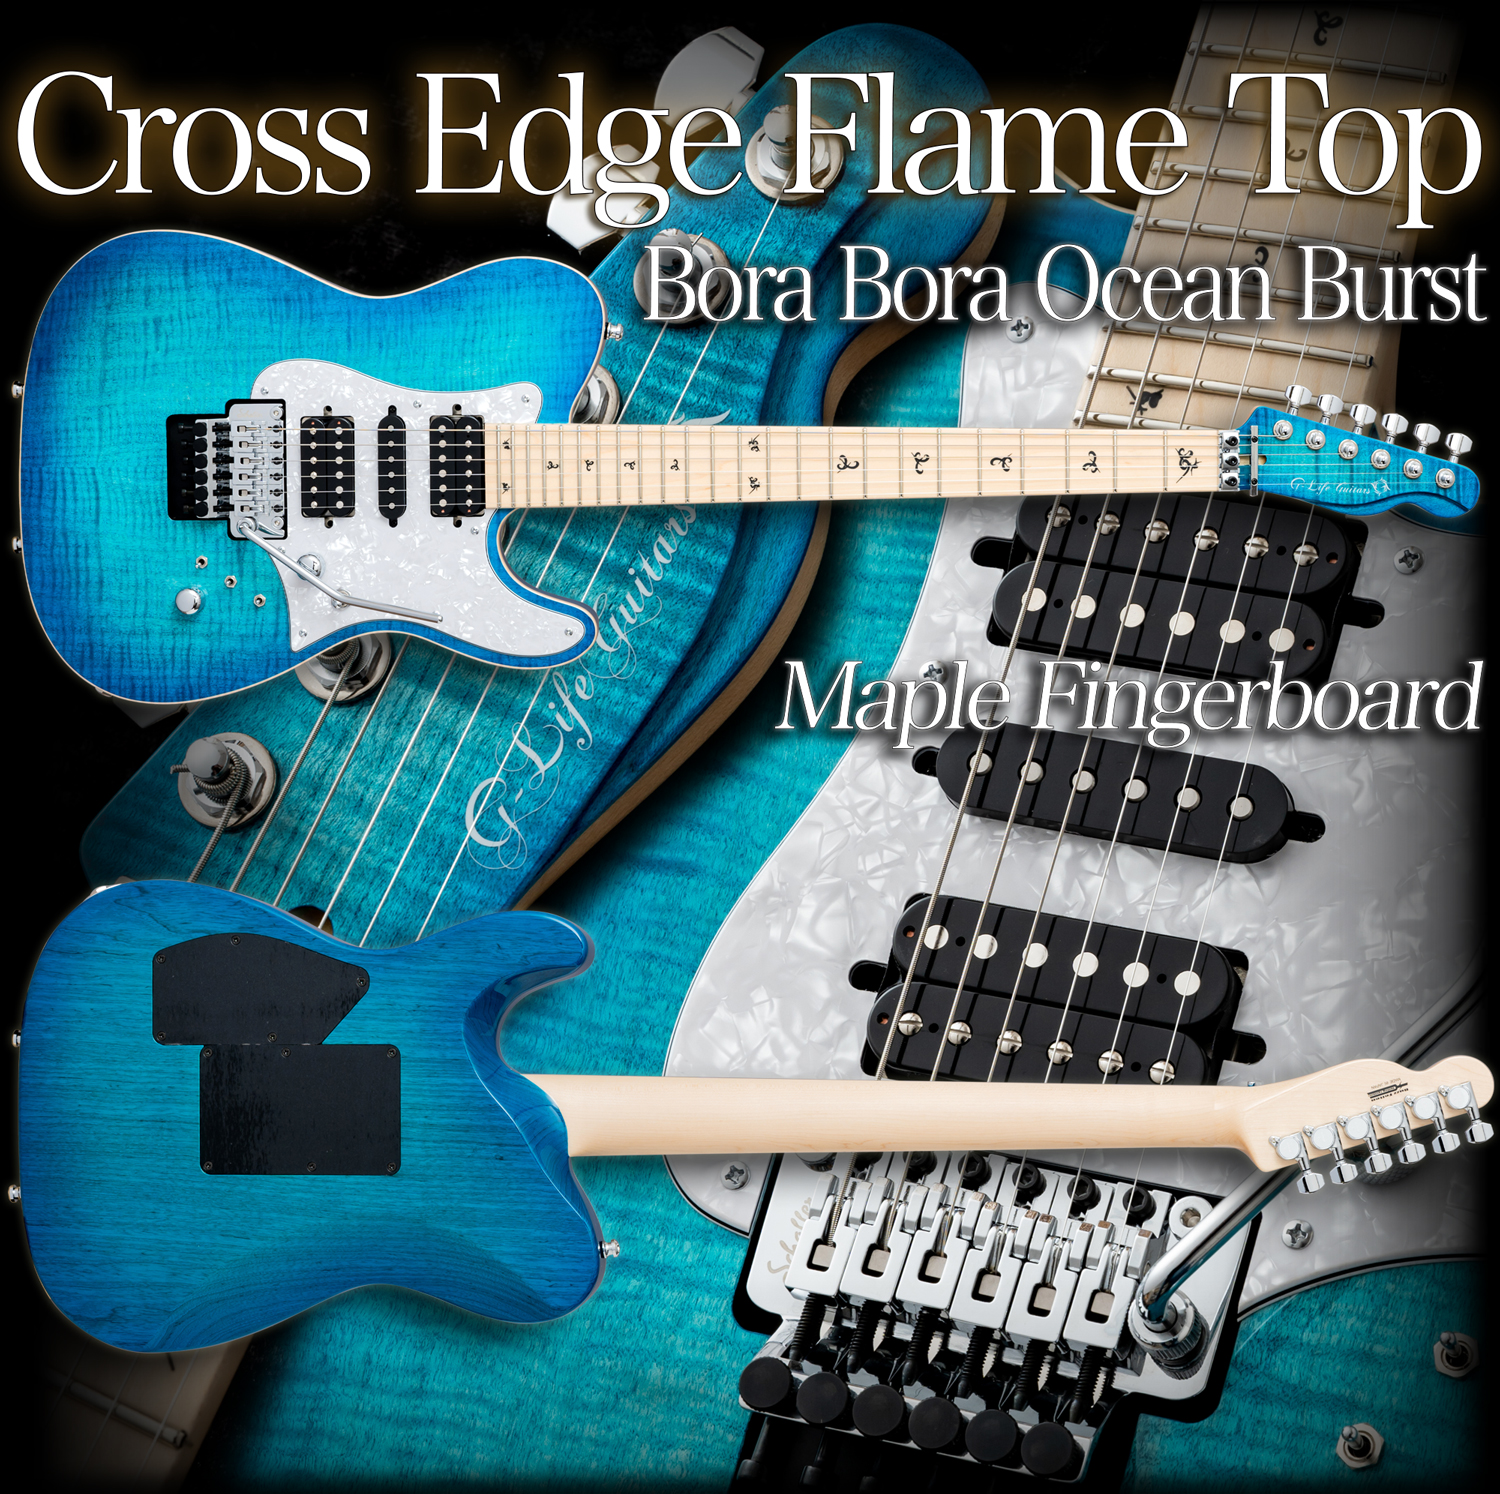 G-Life GuitarsCross Edge Flame Top / Bora Bora Ocean Burst